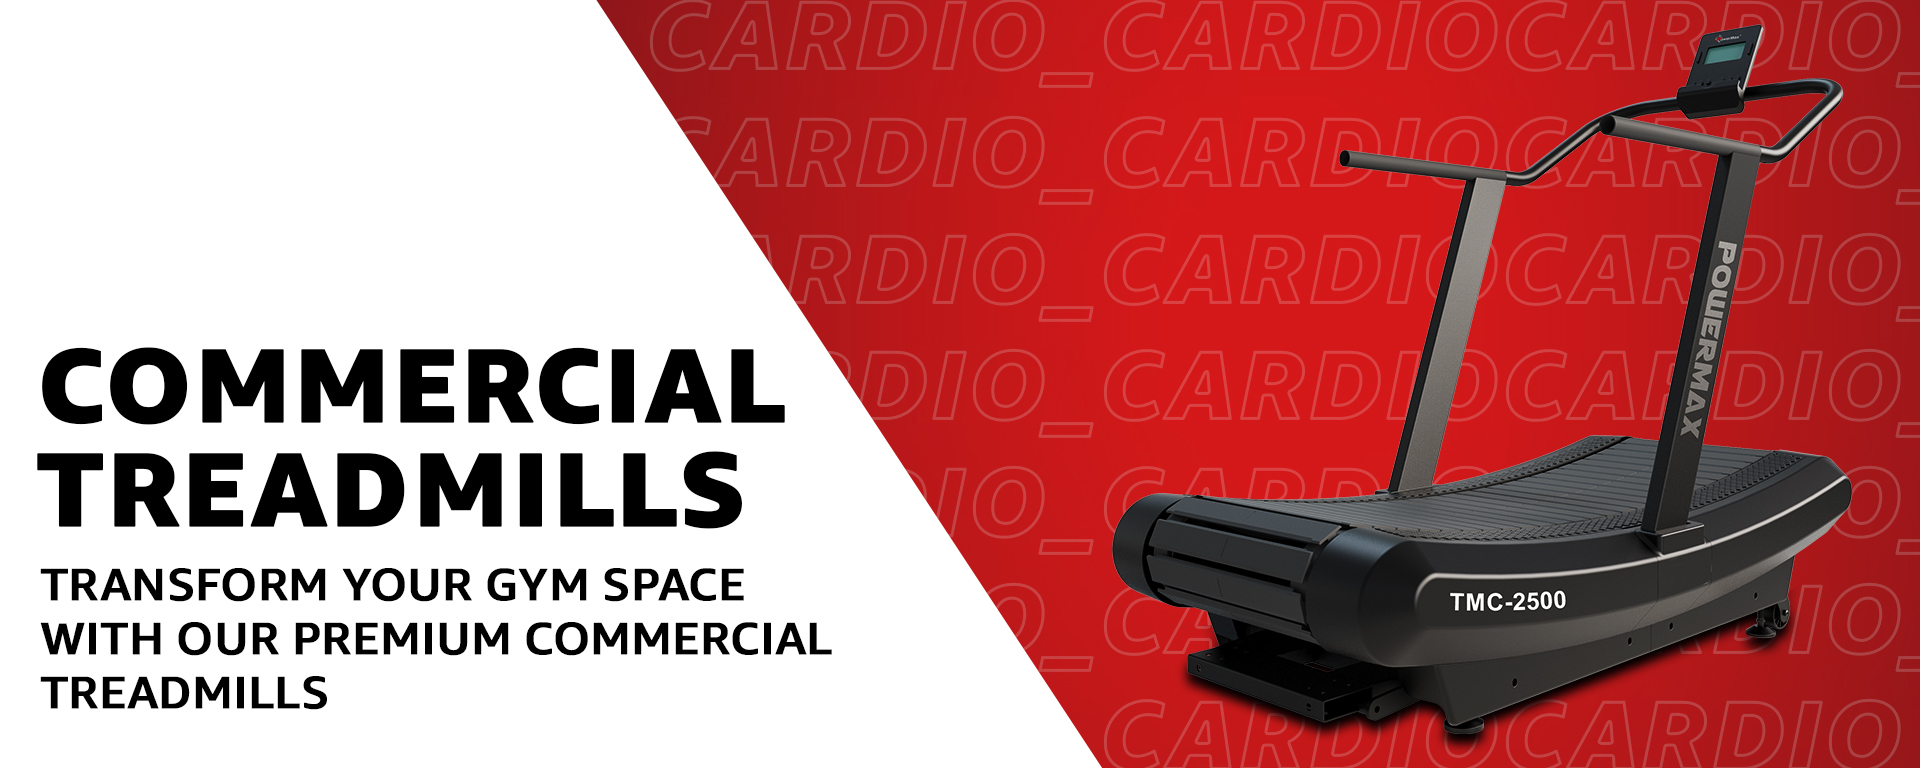 Use > cardio > commercial treadmill